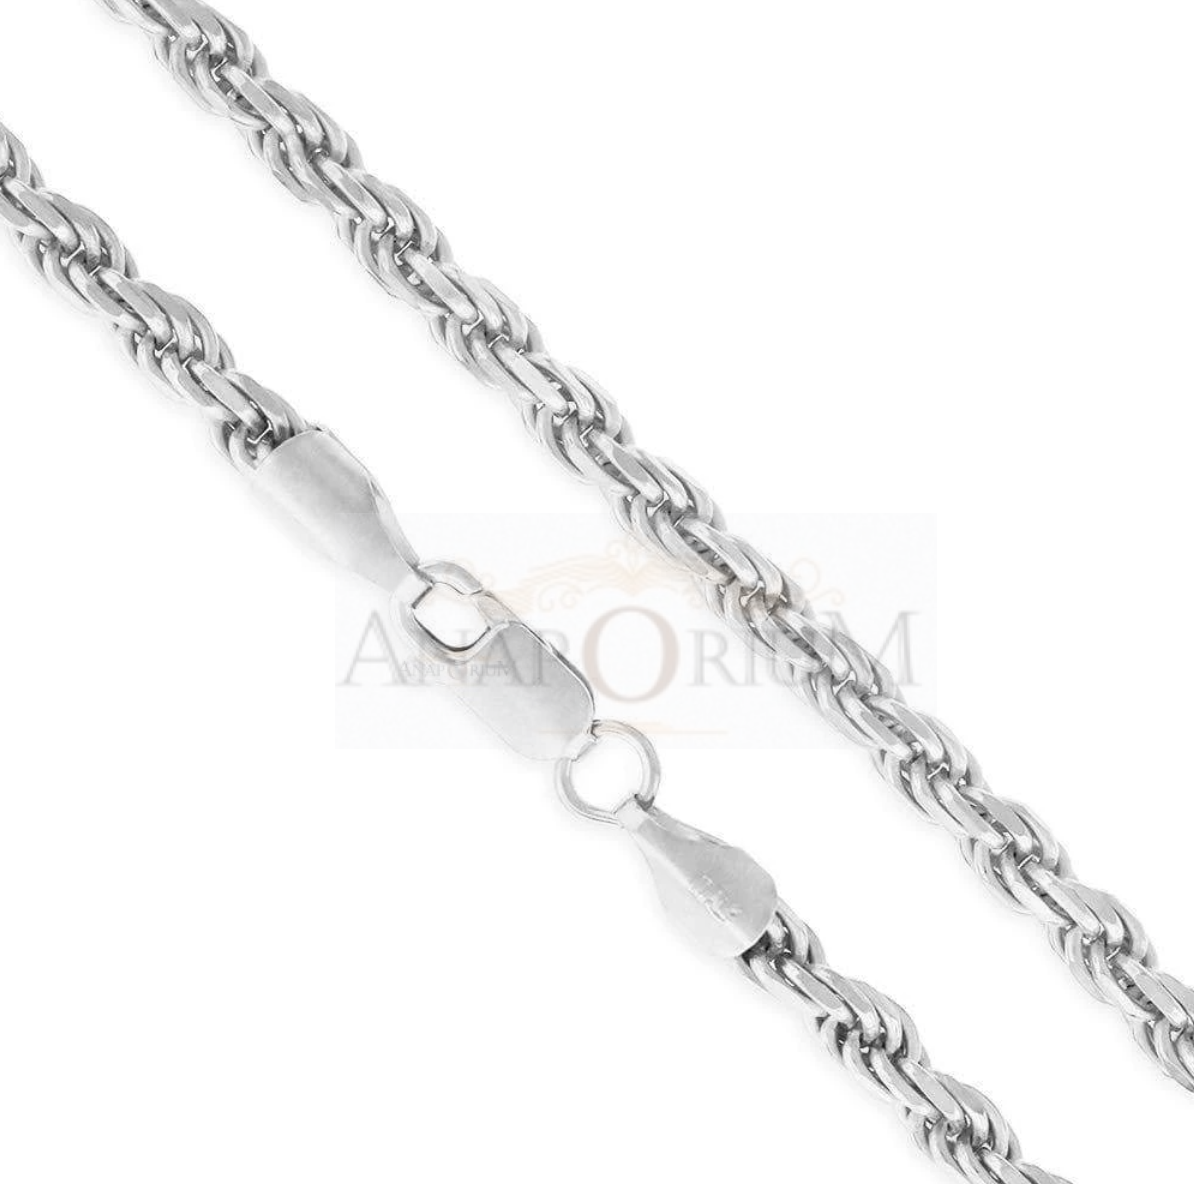 Sterling Silver Flower Mandala on 2mm 16-30 inch sterling necklace.